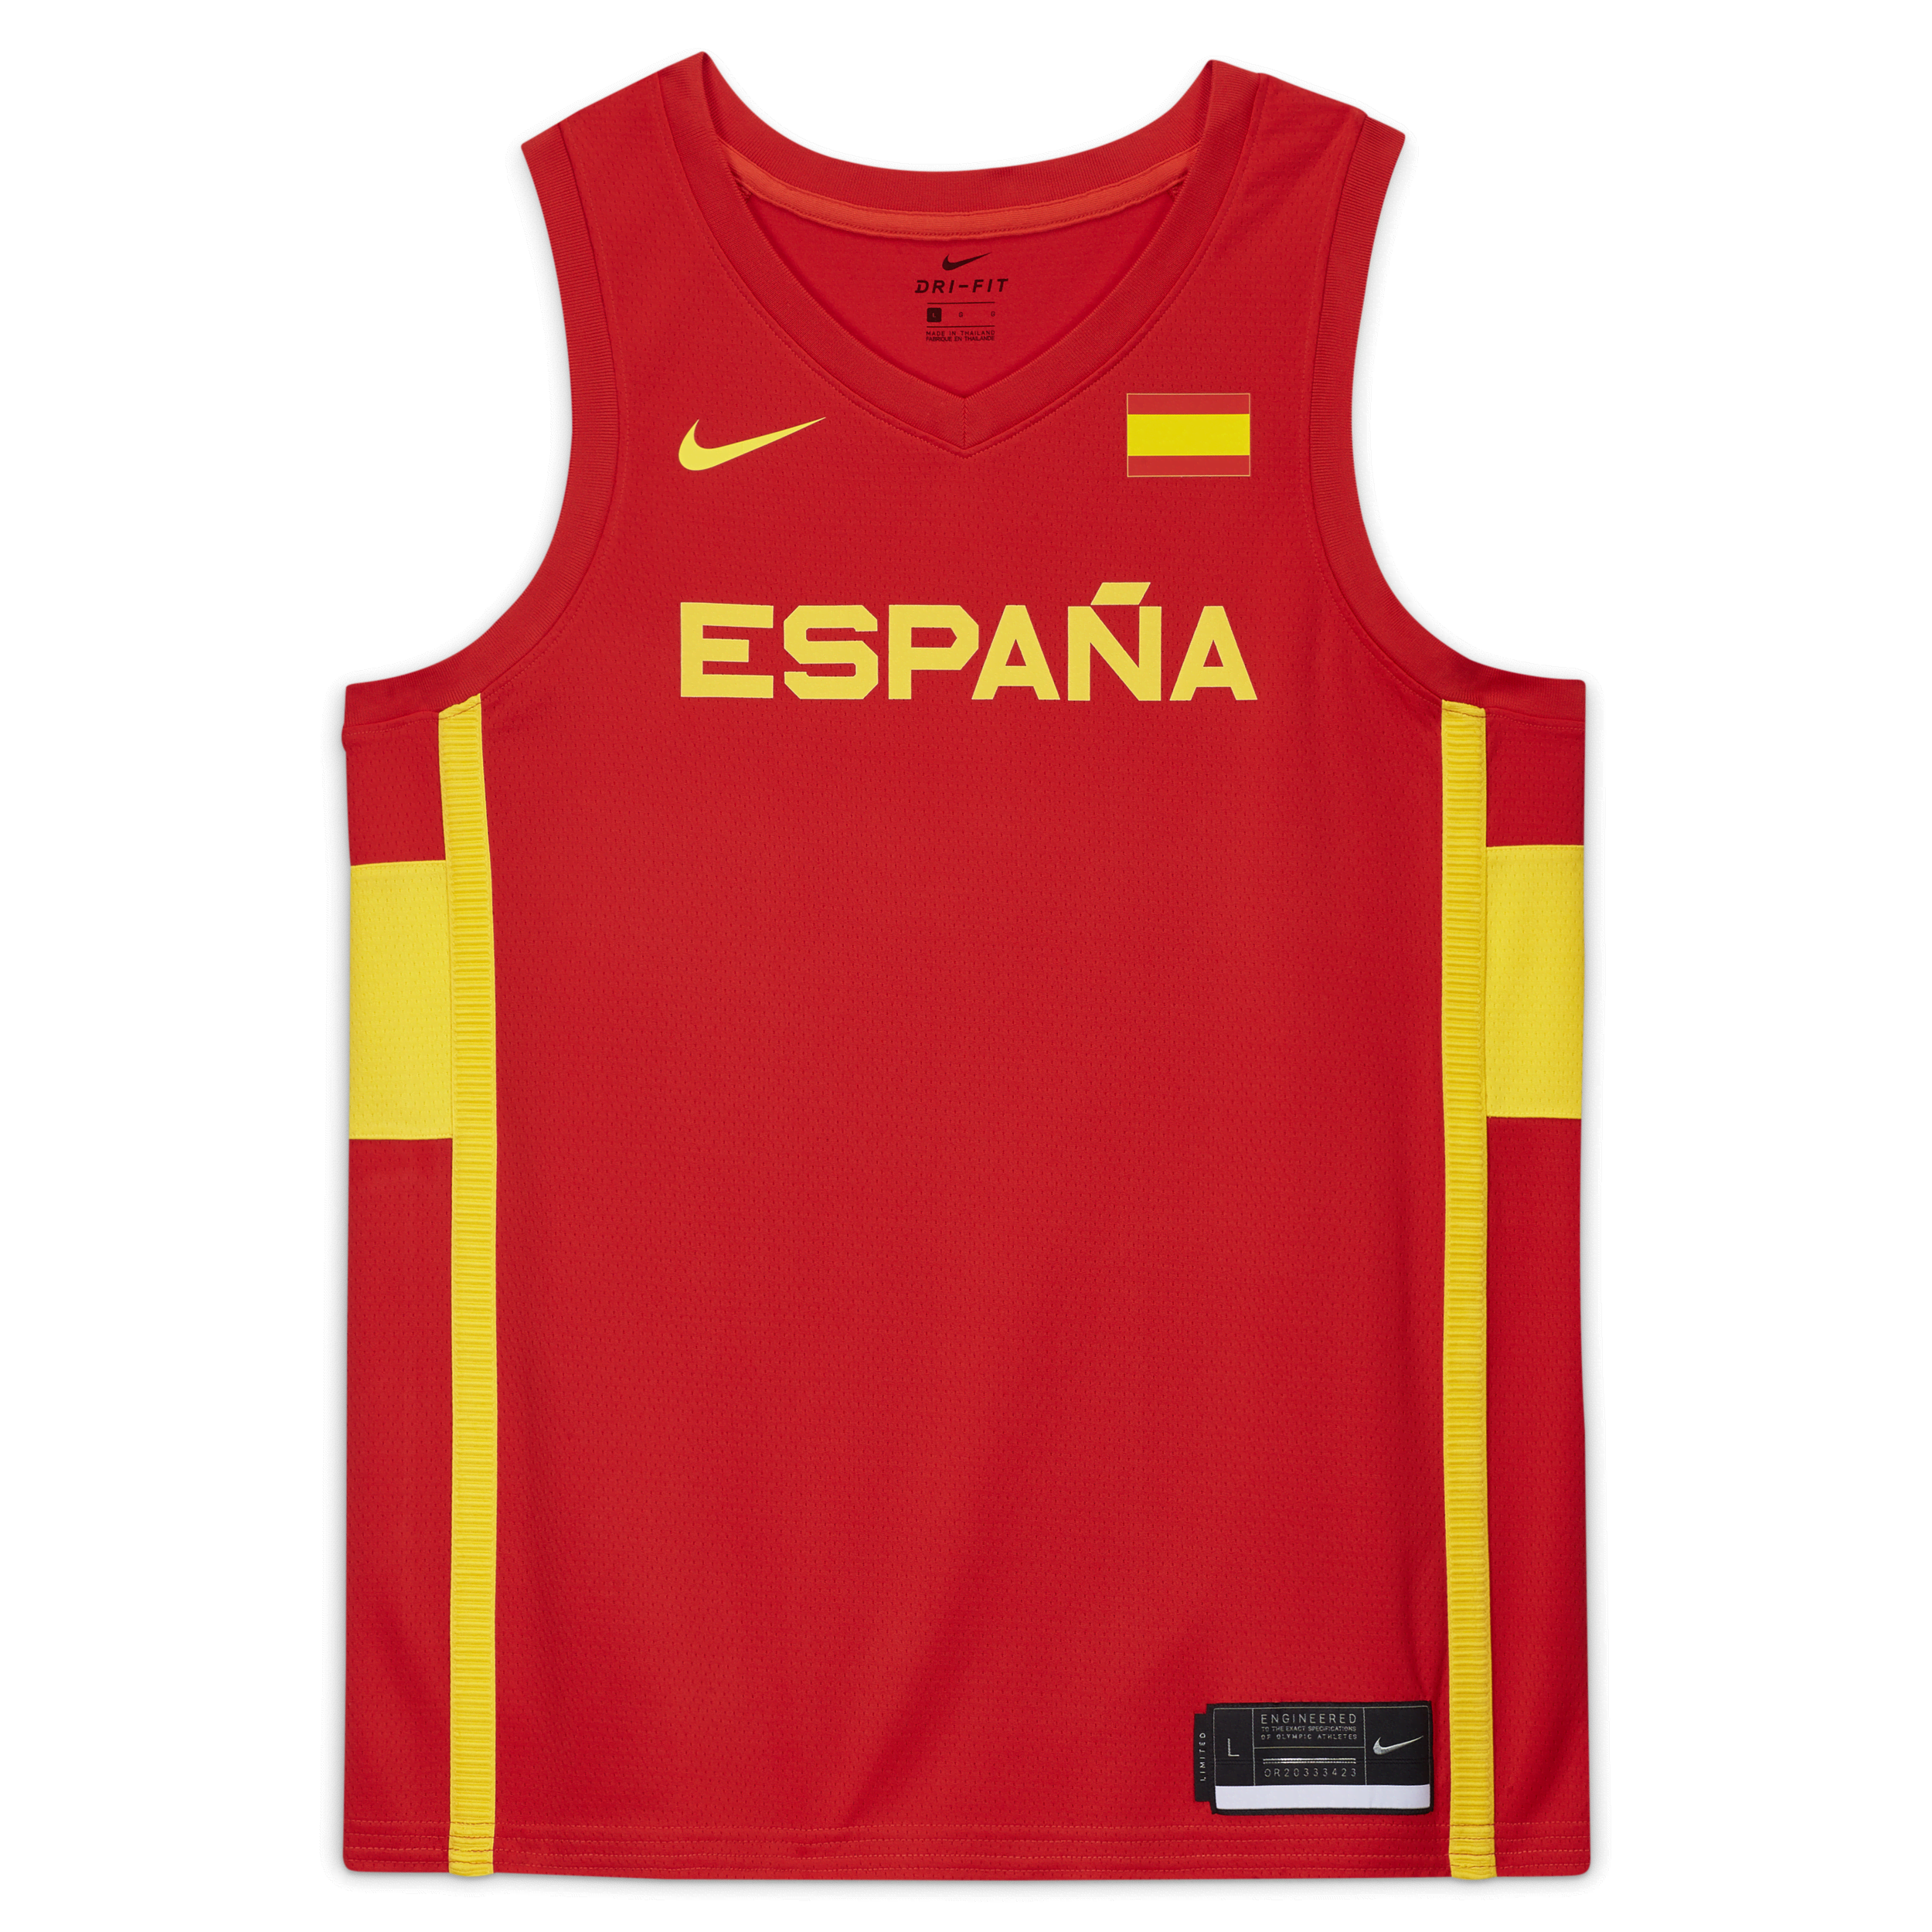 Spain Nike Basketball Jersey in KSA. Nike SA